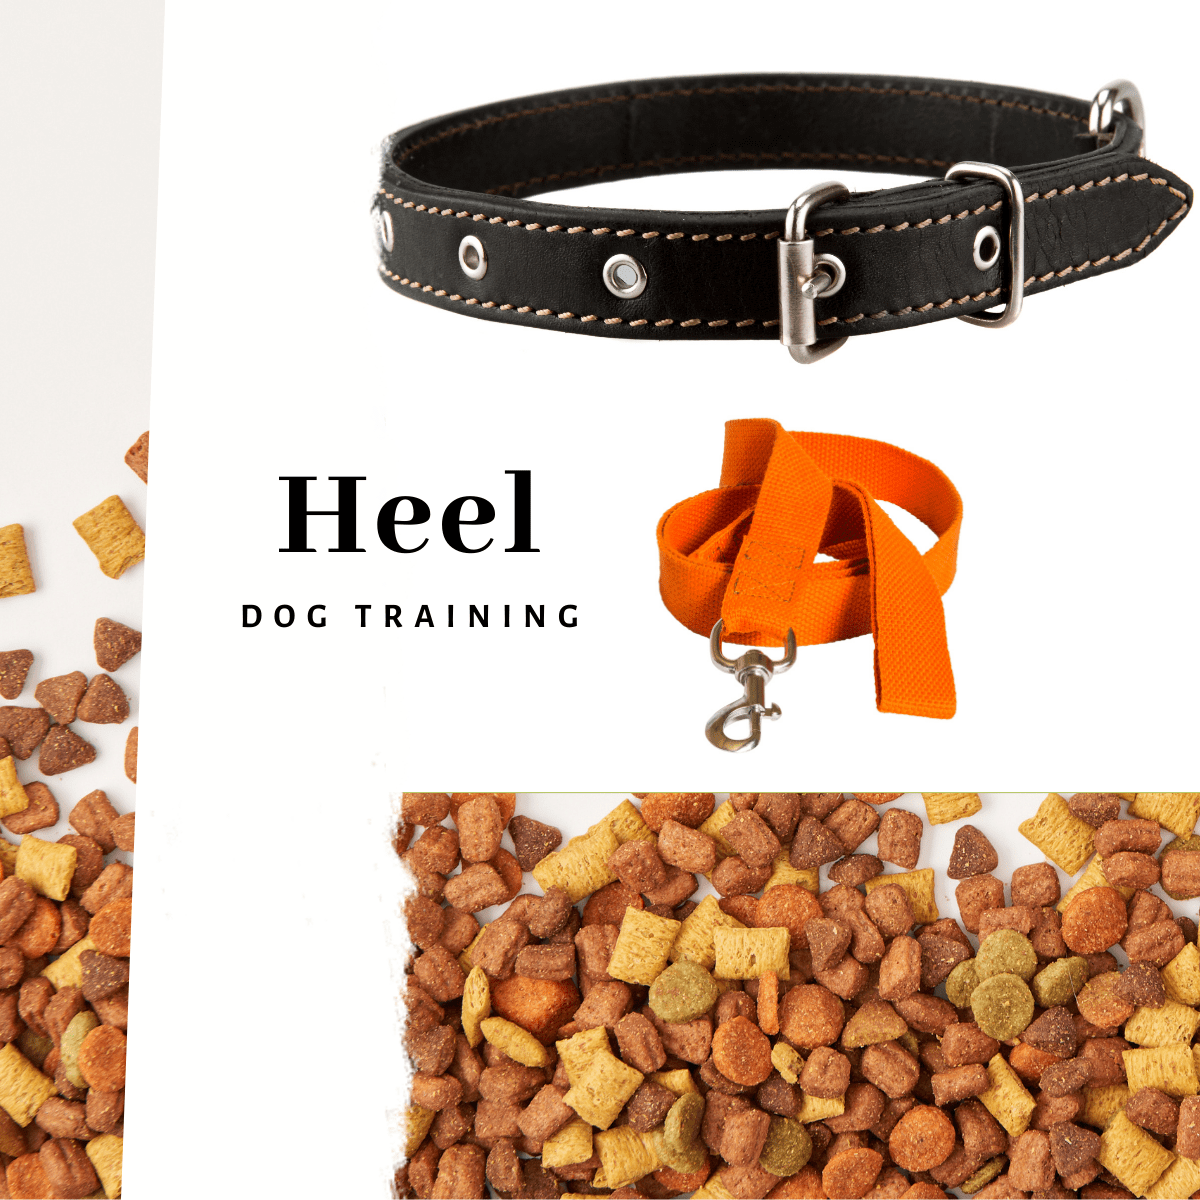 How To Teach A Dog To Heel (Training)